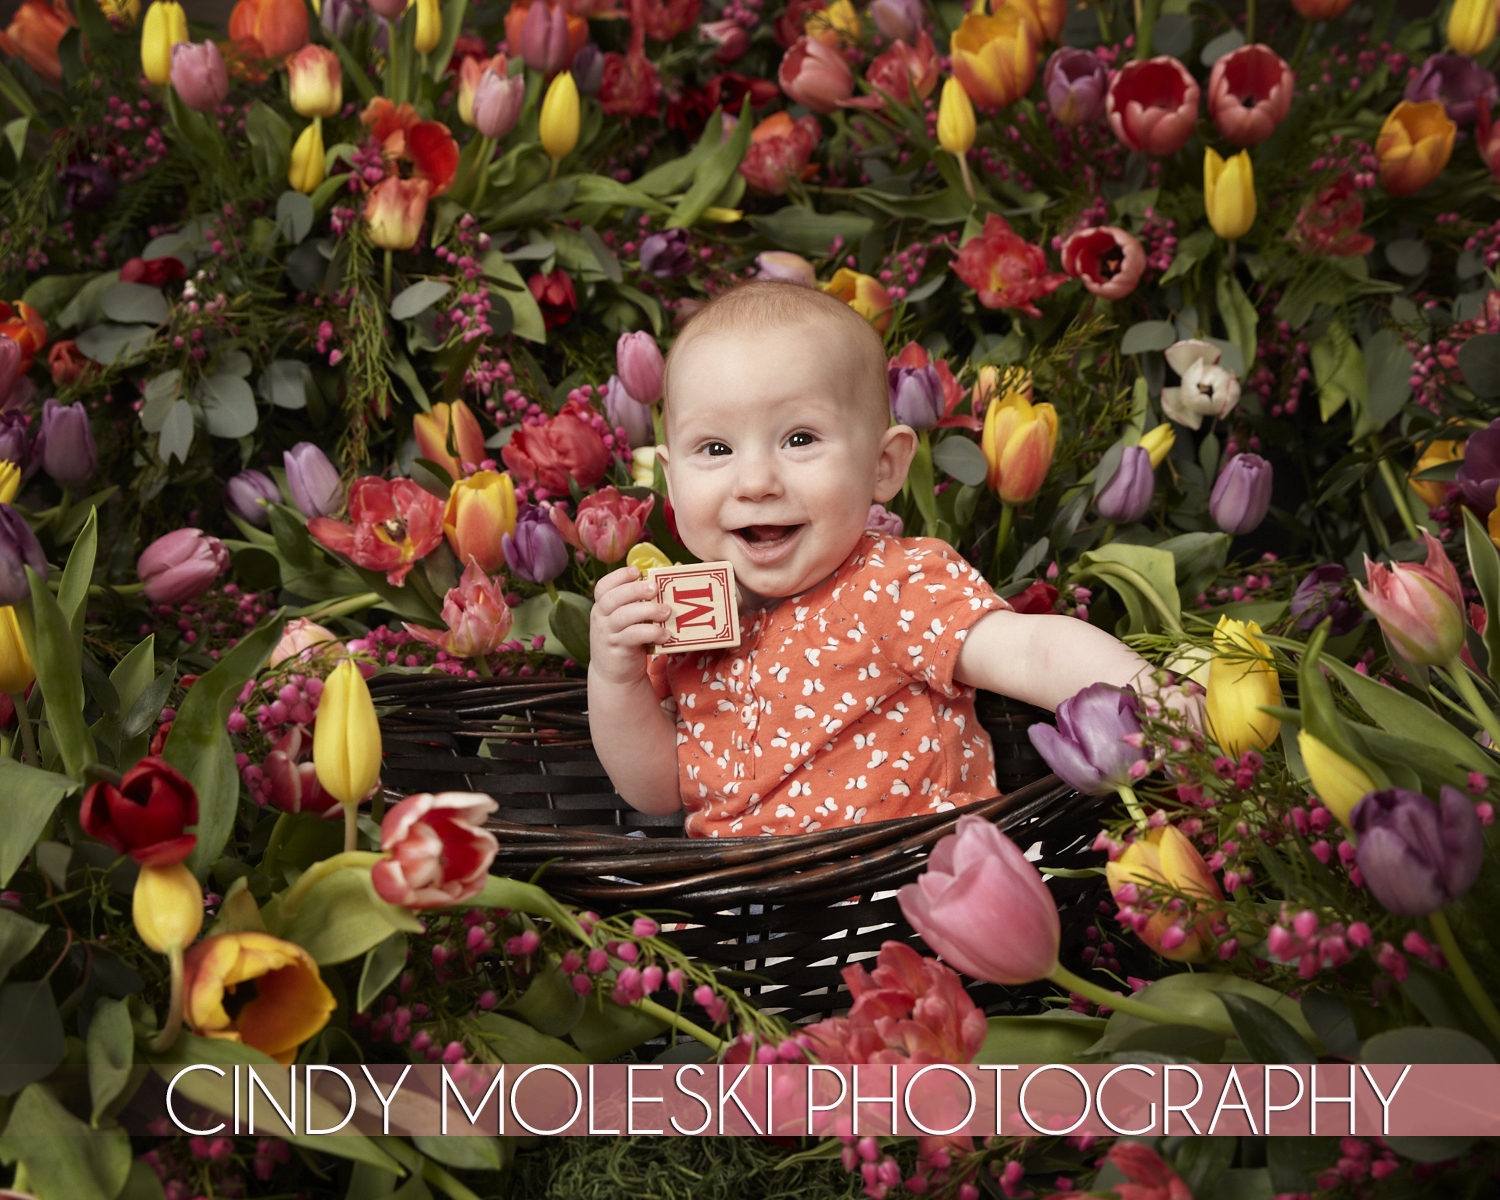 Garden Babies-Cindy Moleski-Photography-professional-children-toddler-flowers-floral-basket-flower pot-saskatoon-saskatchewan8423.jpg